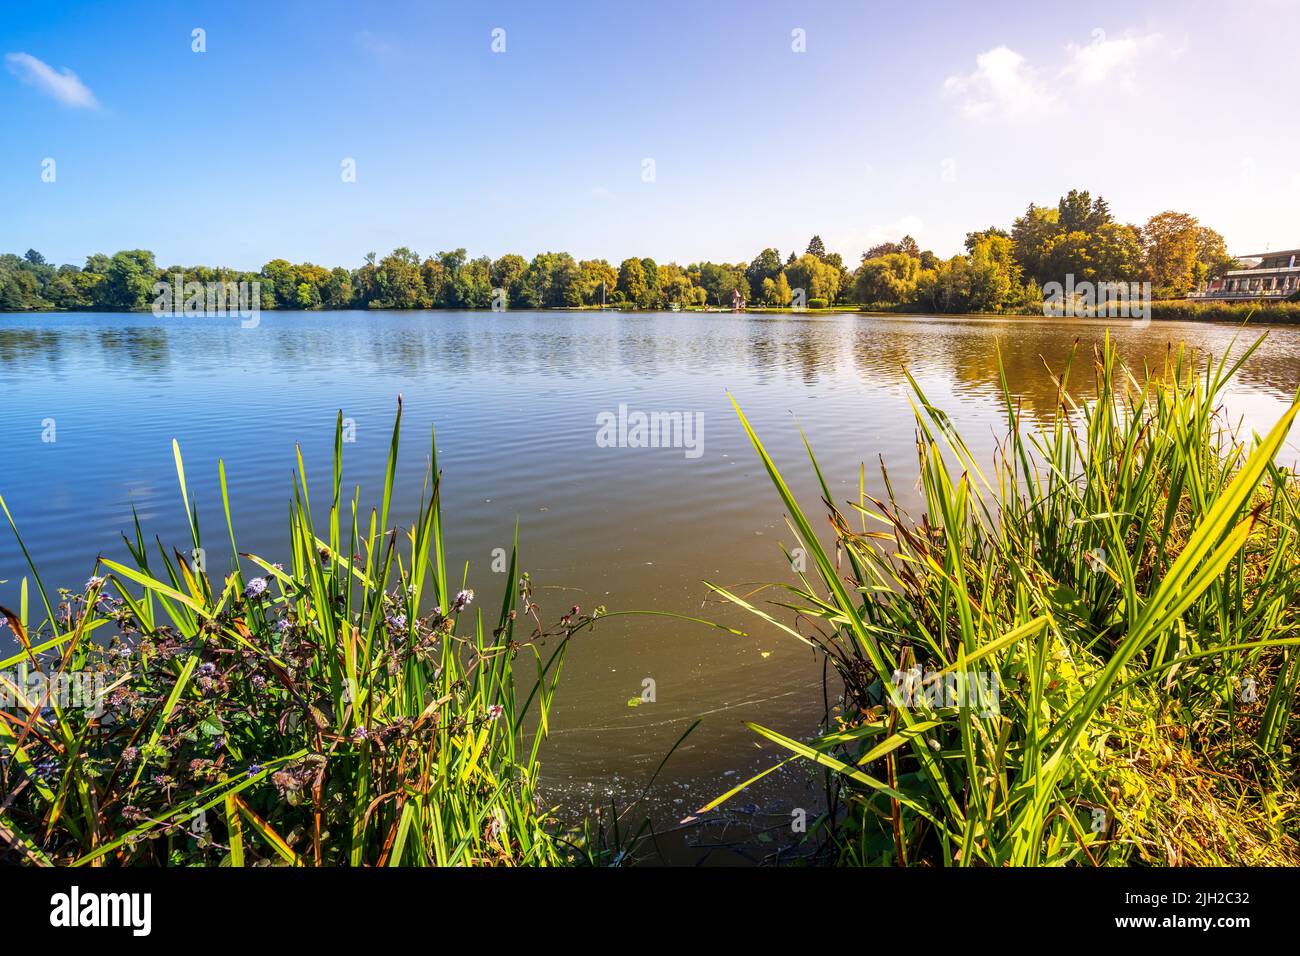 City Lake in Bad Waldsee, Germany Stock Photo